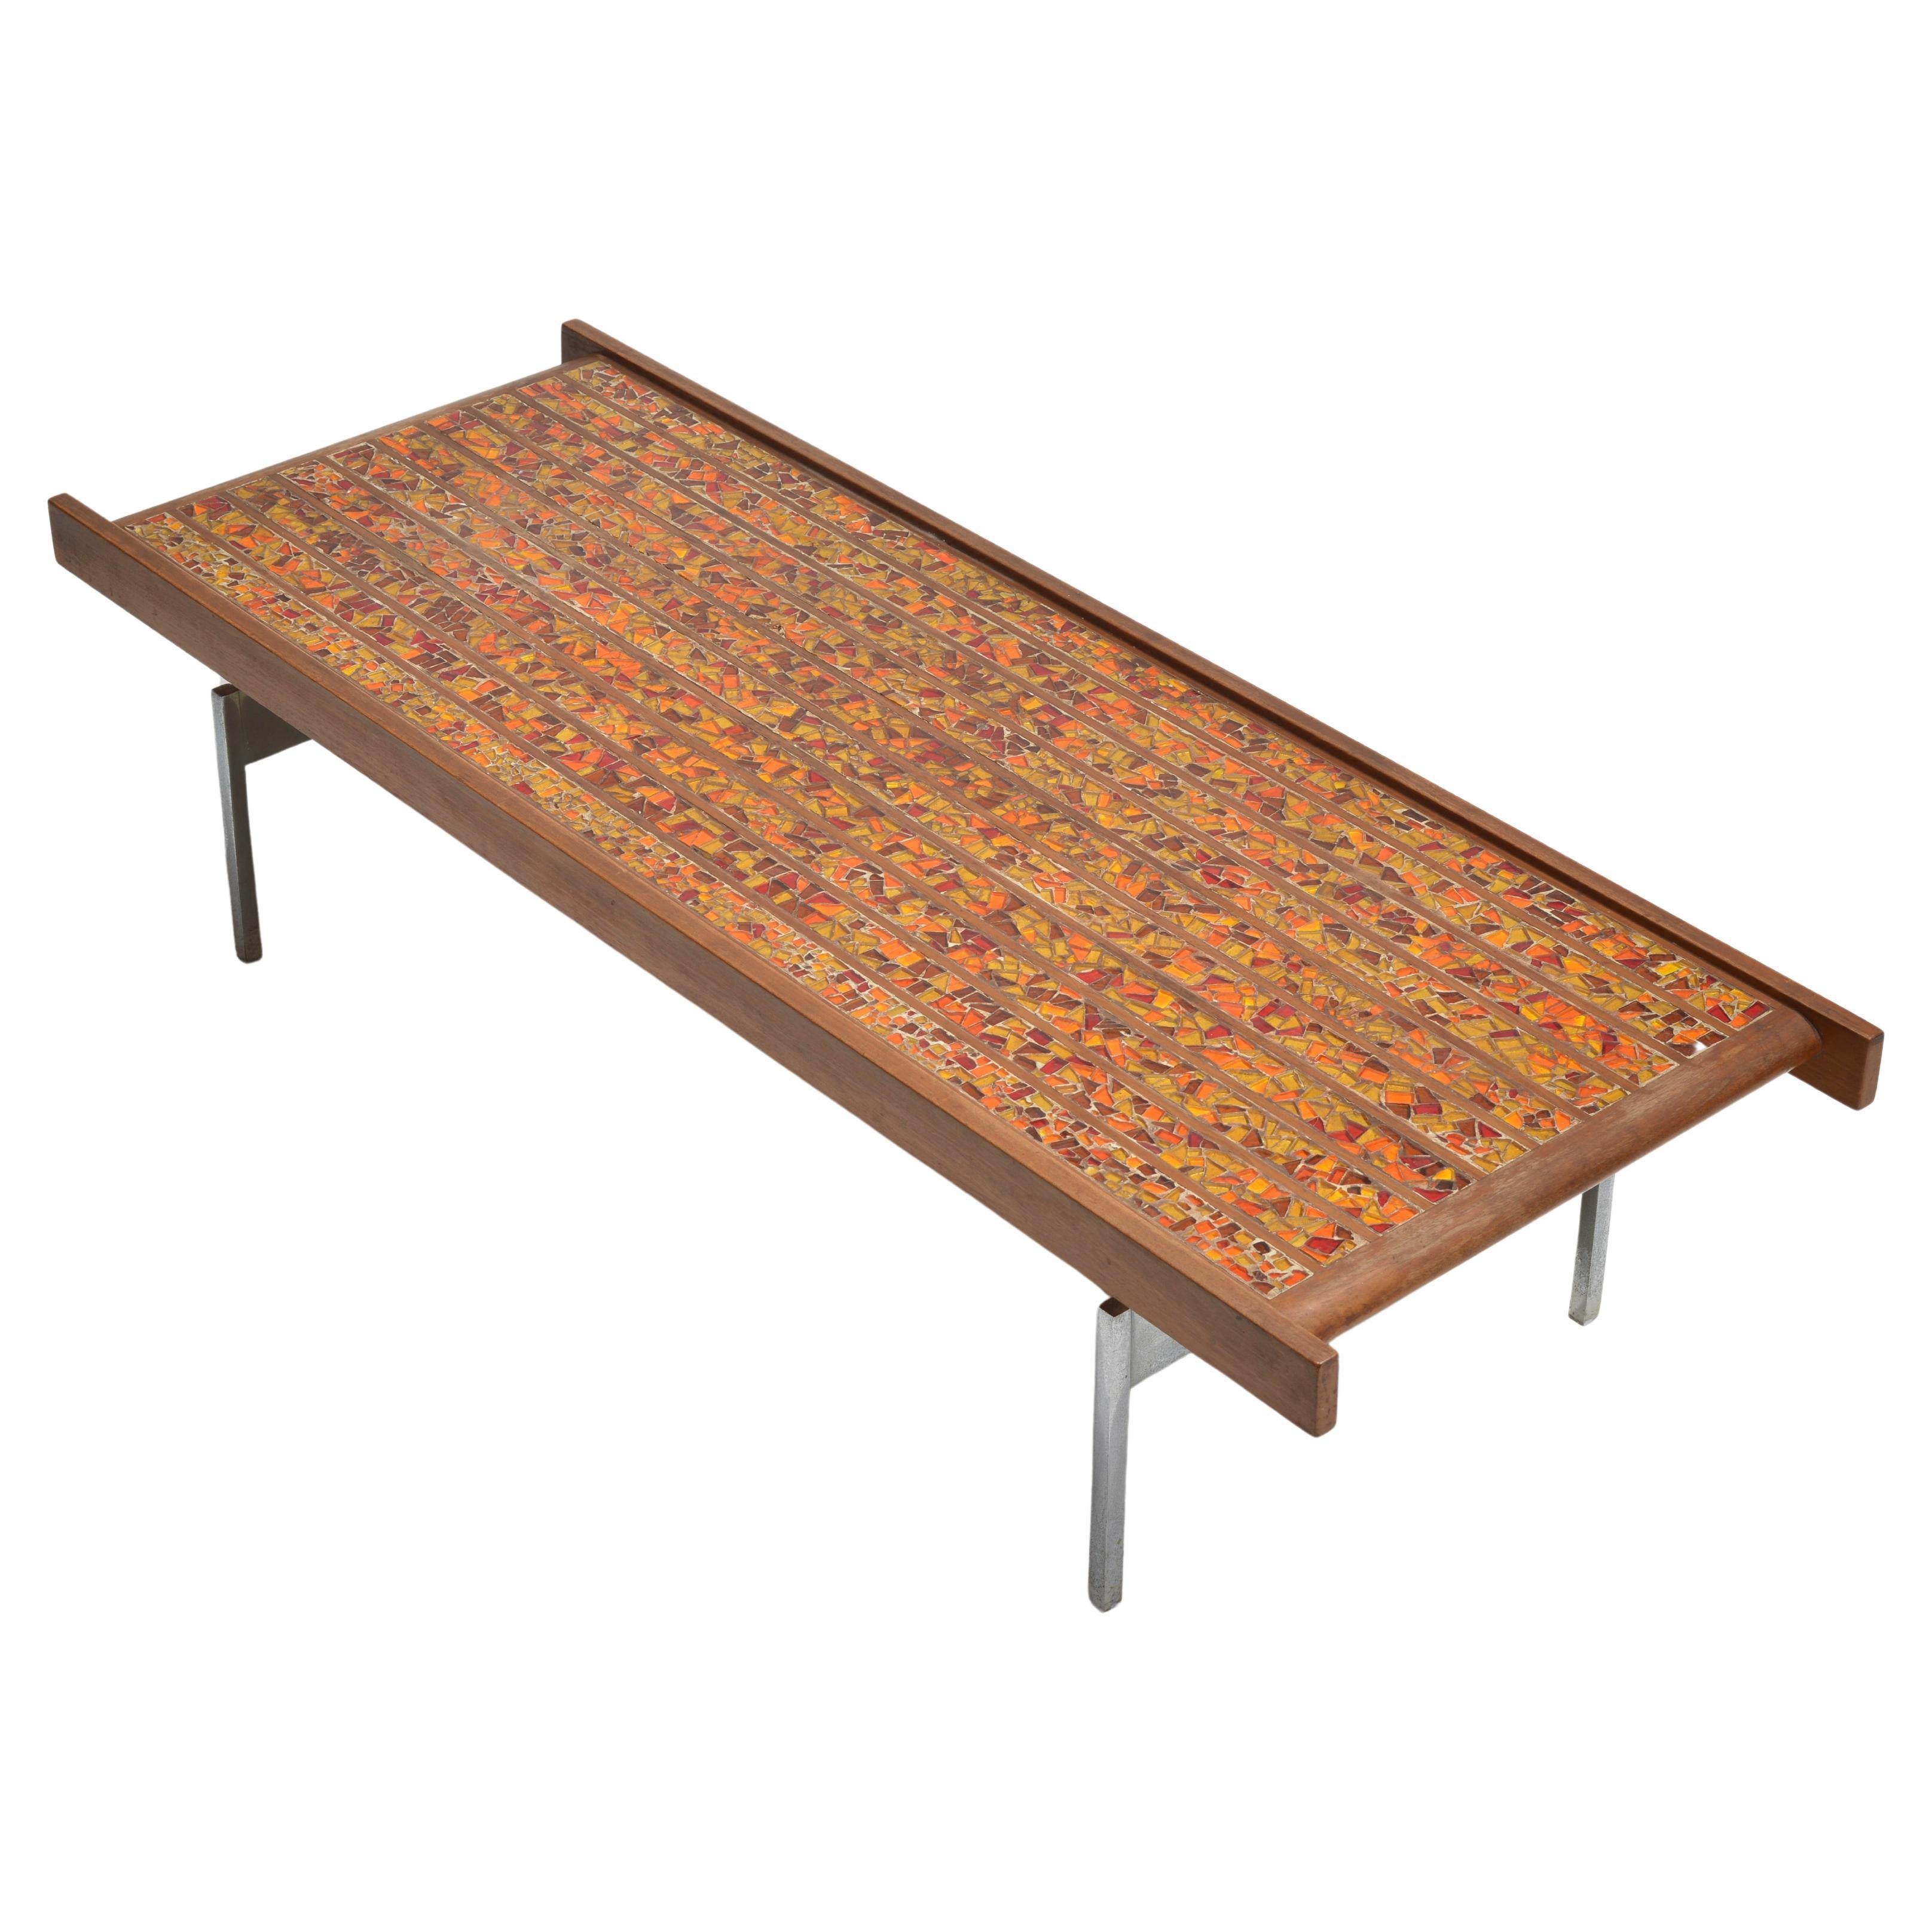 Modernist Tile, Wood and Chrome Rectangular Coffee Table